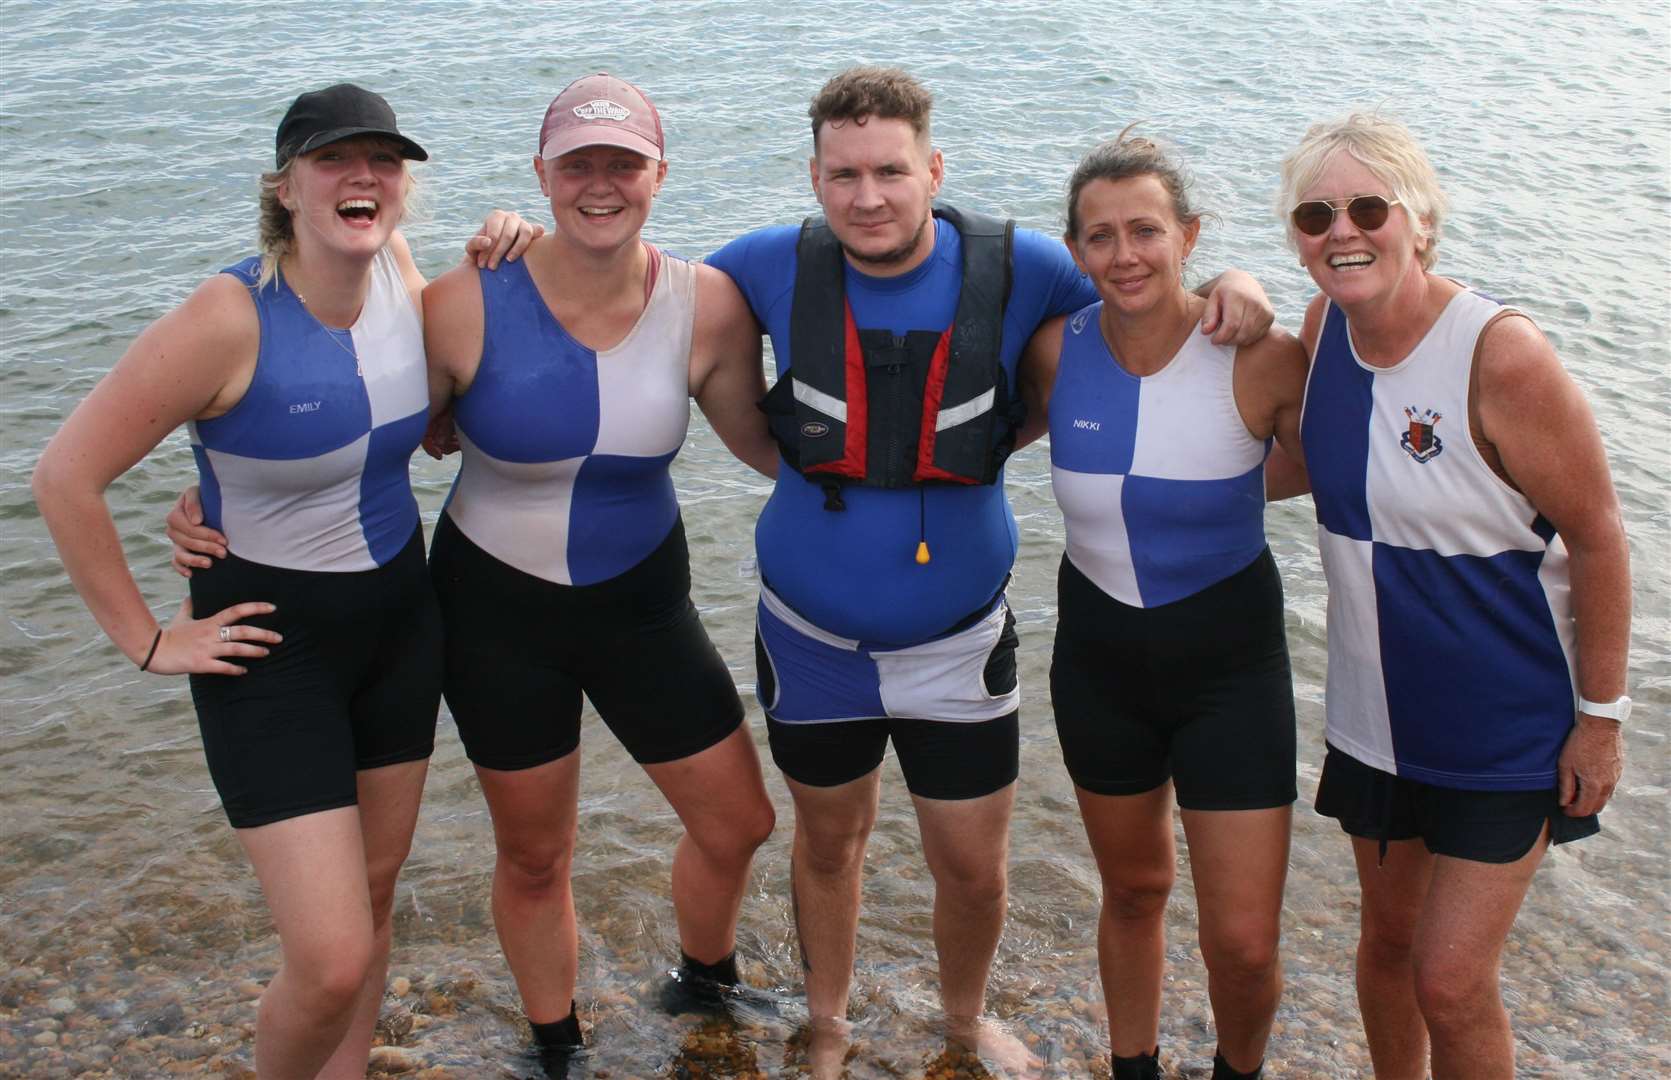 Dover Rowing Club’s women’s novice winners Emily Harvey, Holly Hannington, cox Will Coleman, Nikki Leggatt and Janice Bradford